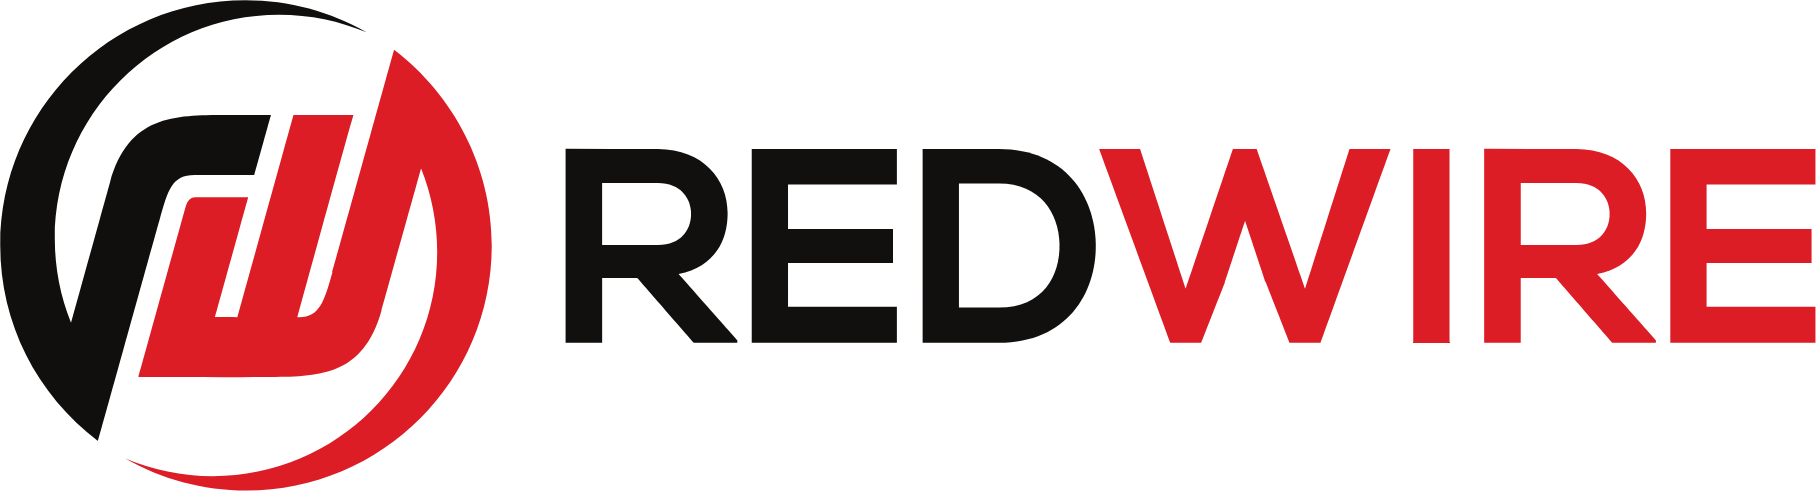 Redwire logo large (transparent PNG)